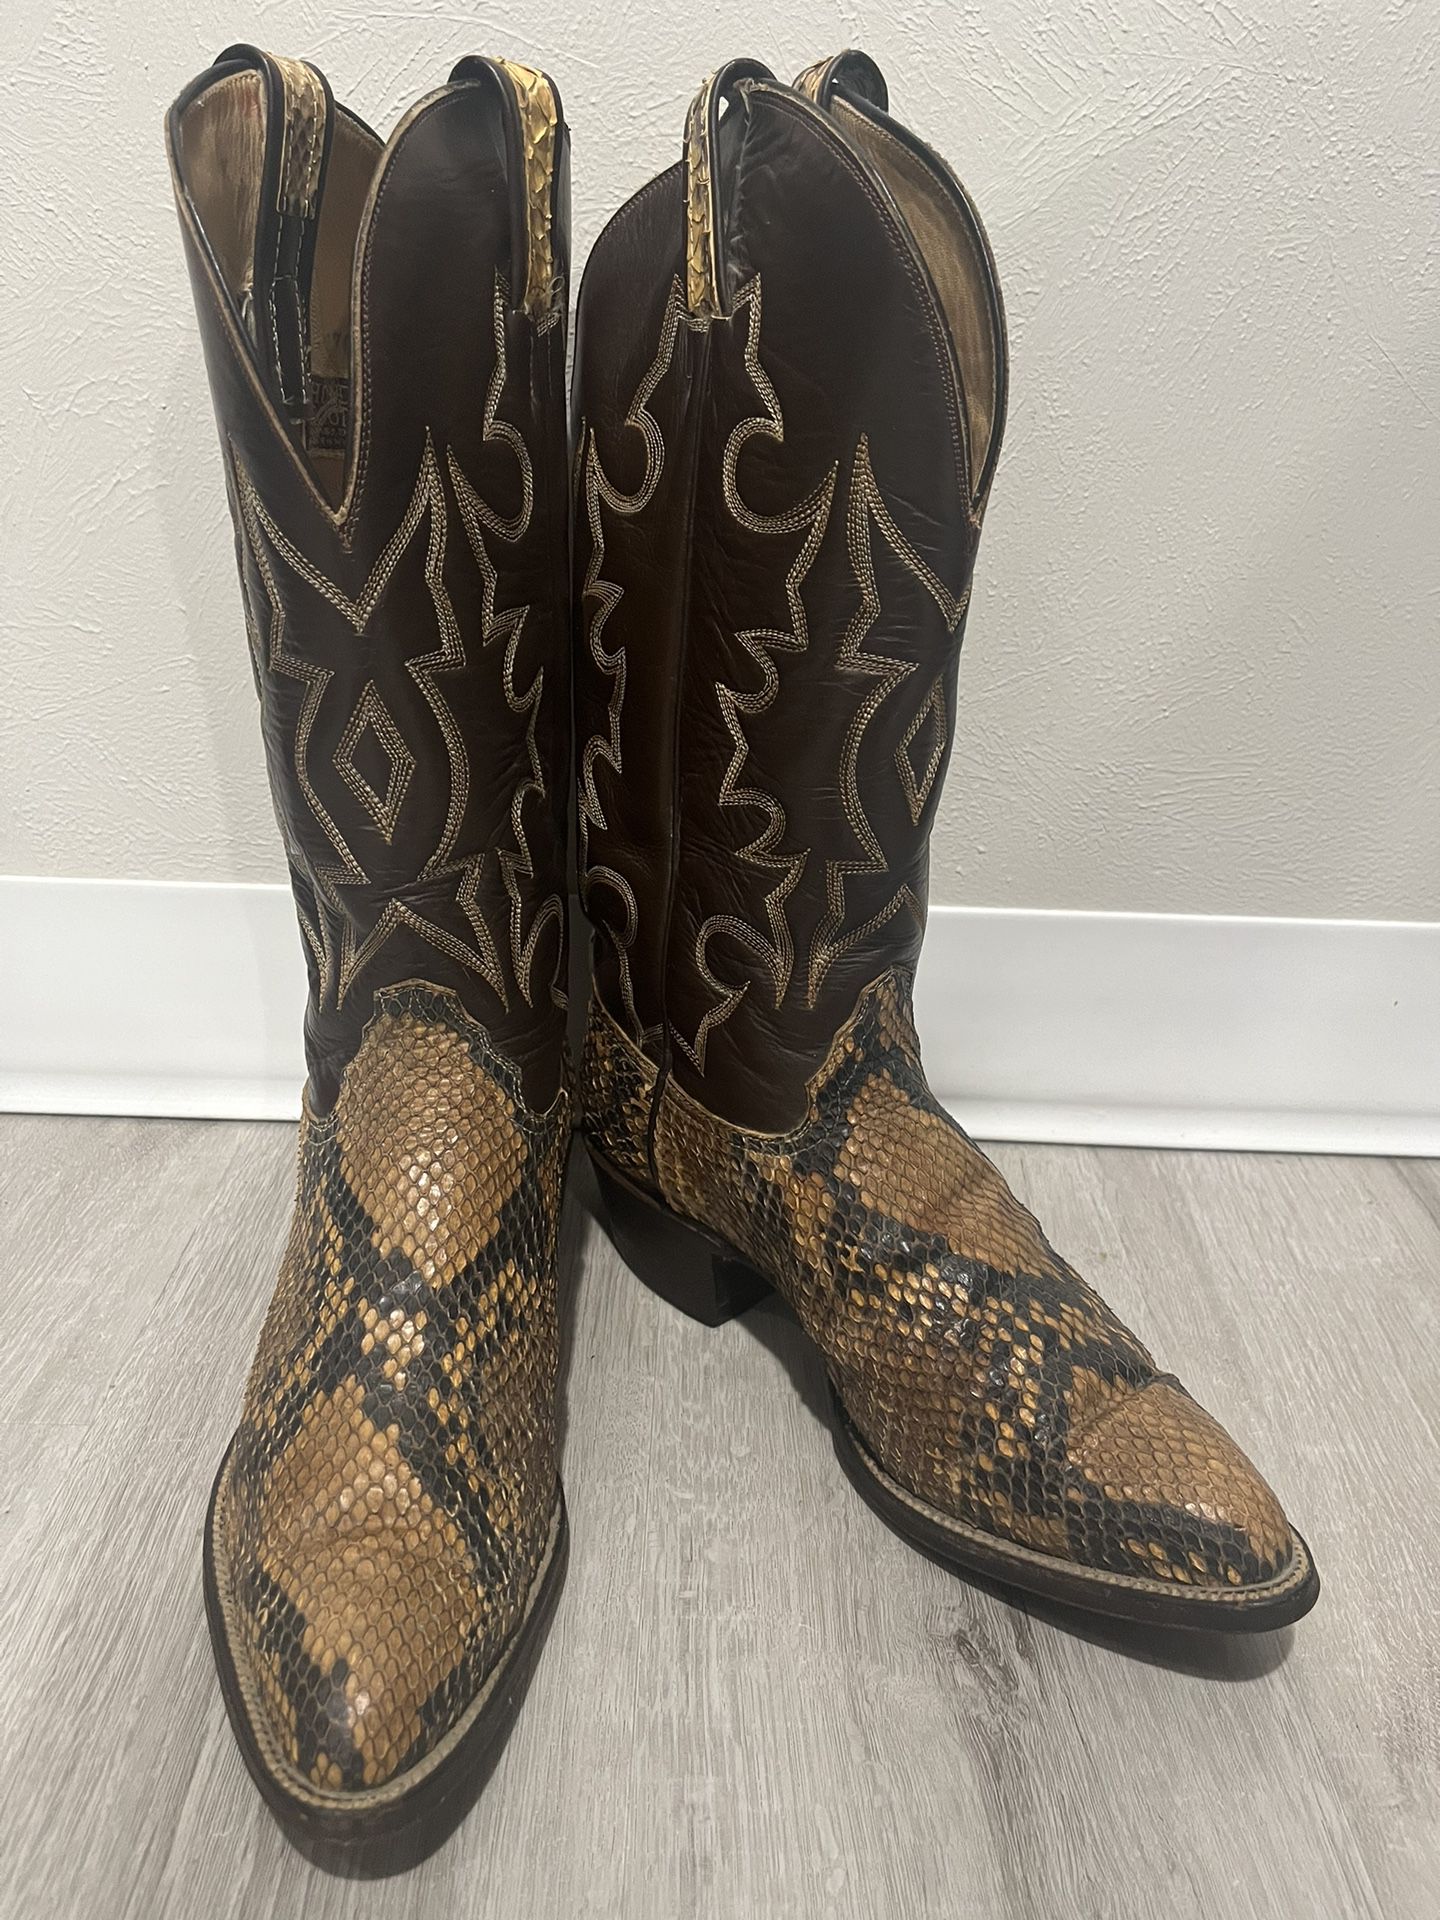 Hondo Boits Men’s Snakeskin Western/ Cowboy Boots Size 9